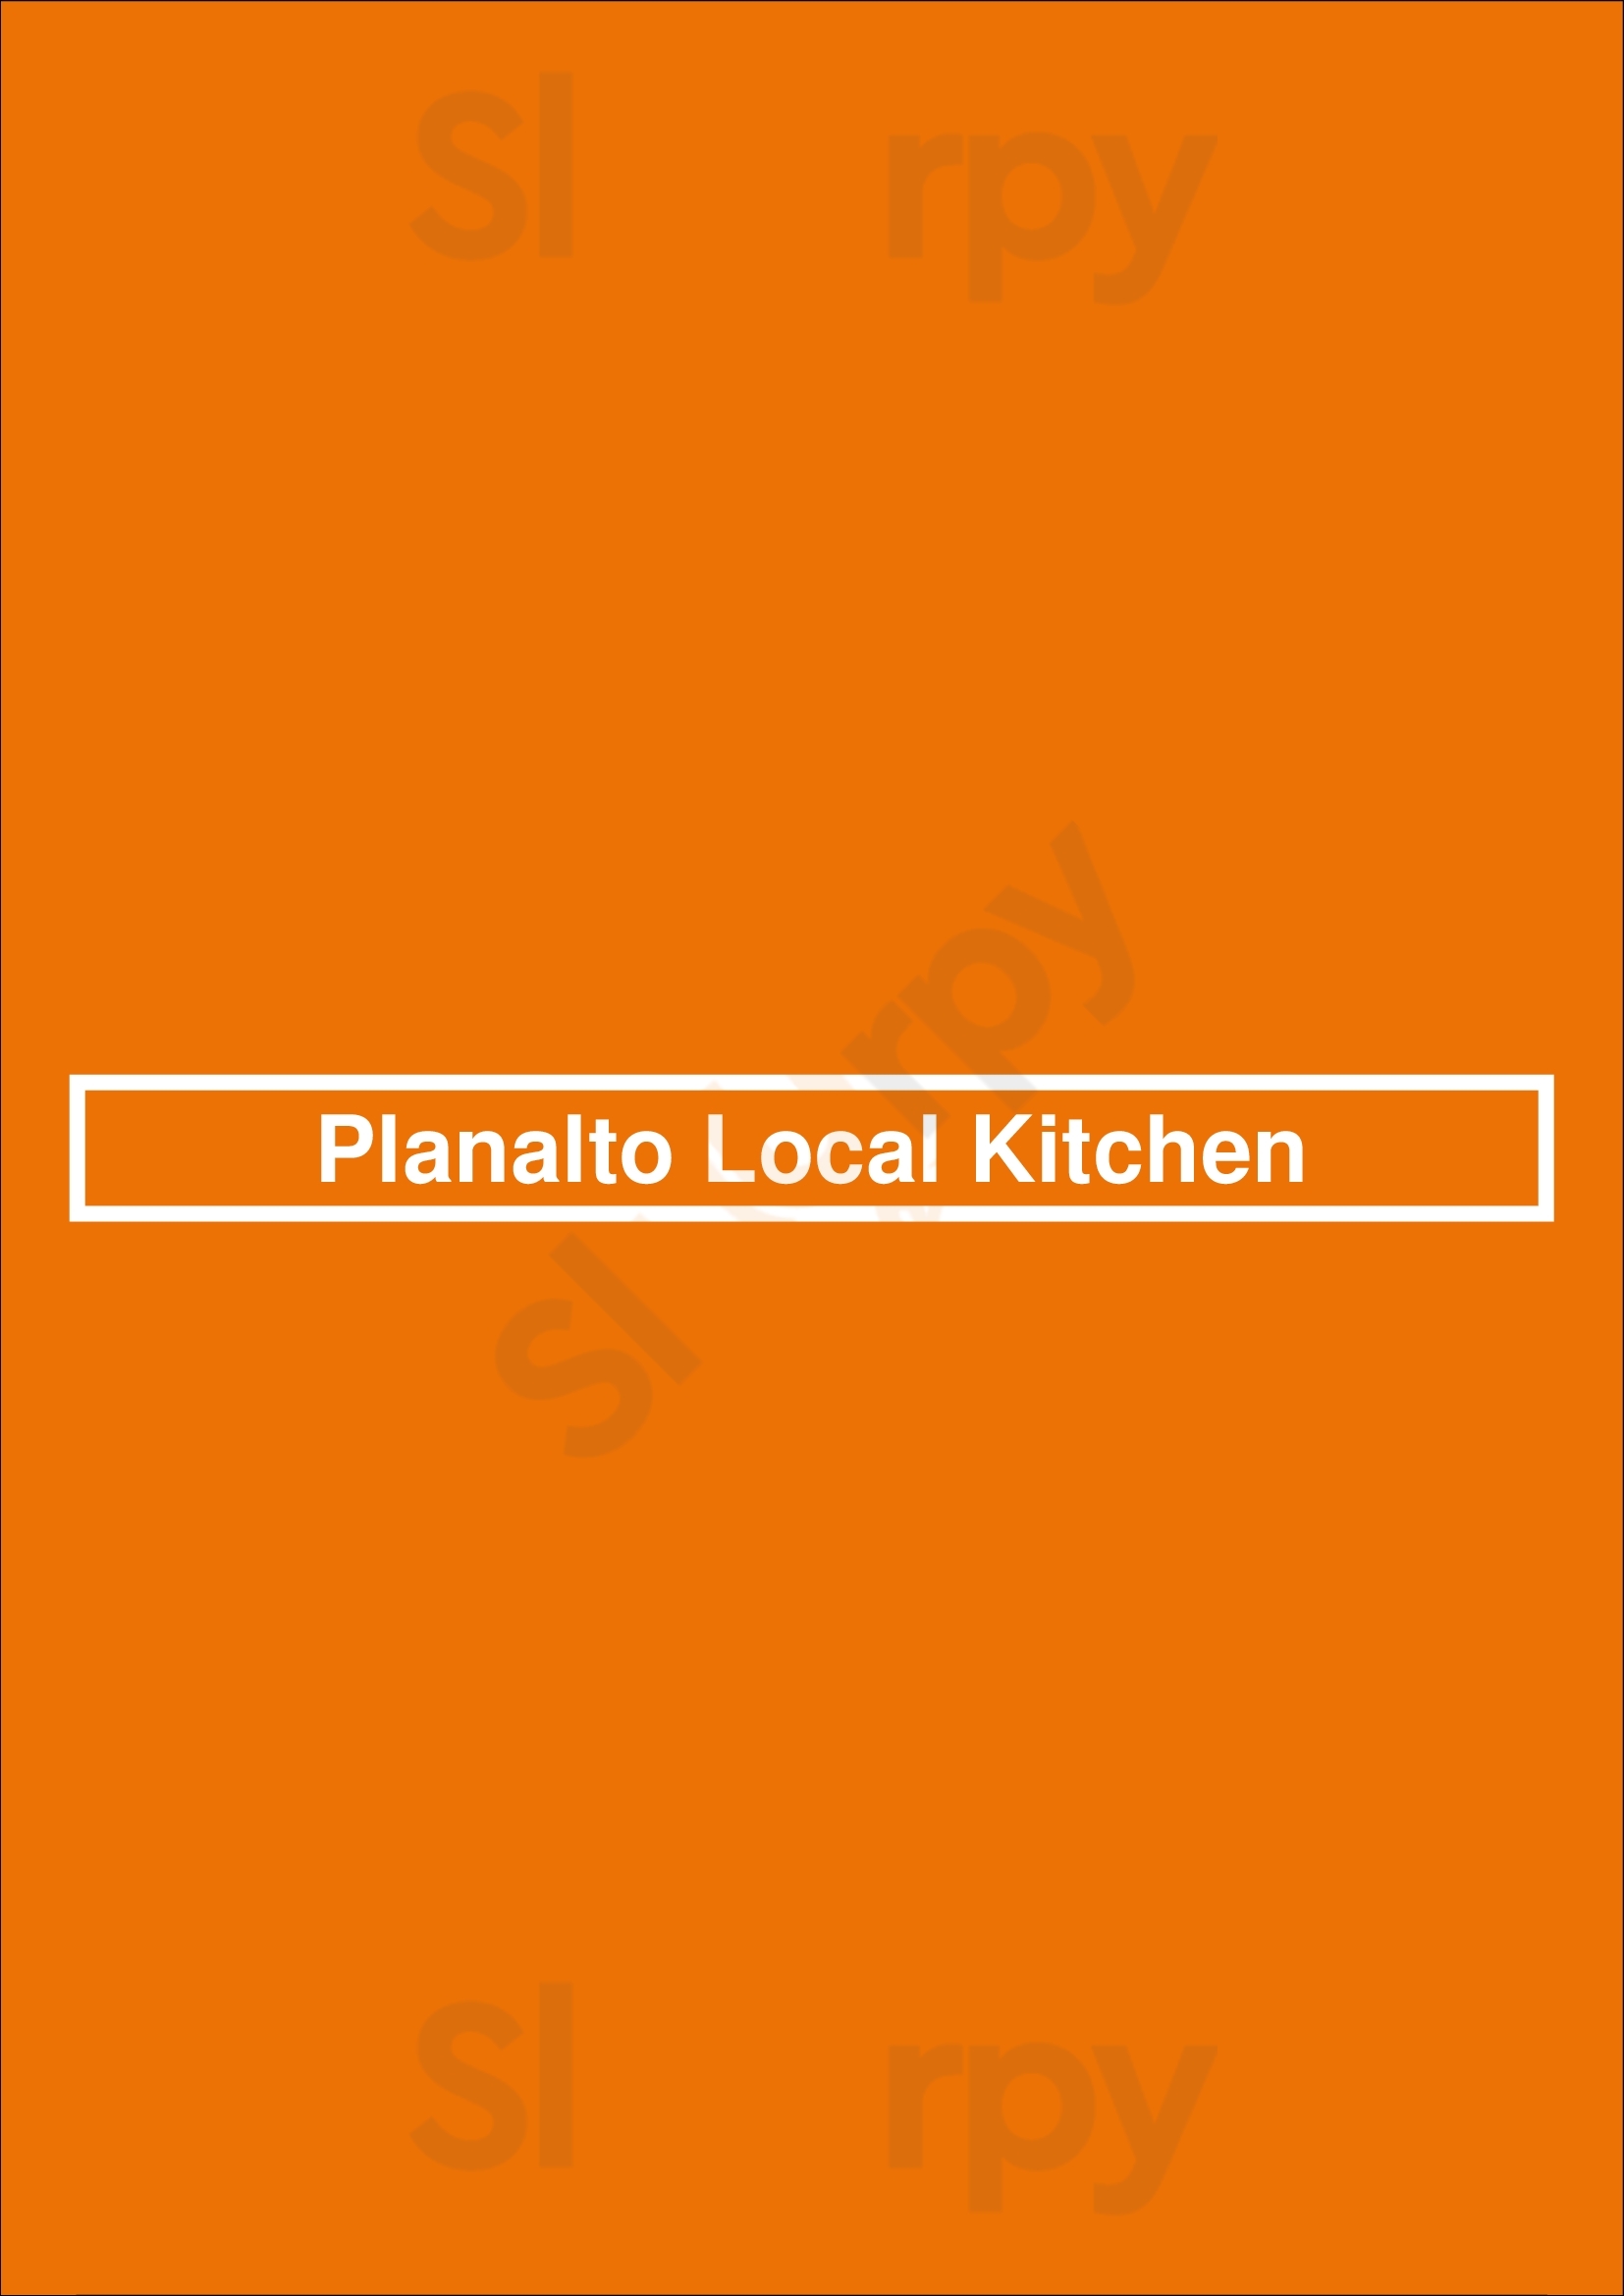 Planalto Local Kitchen Quarteira Menu - 1